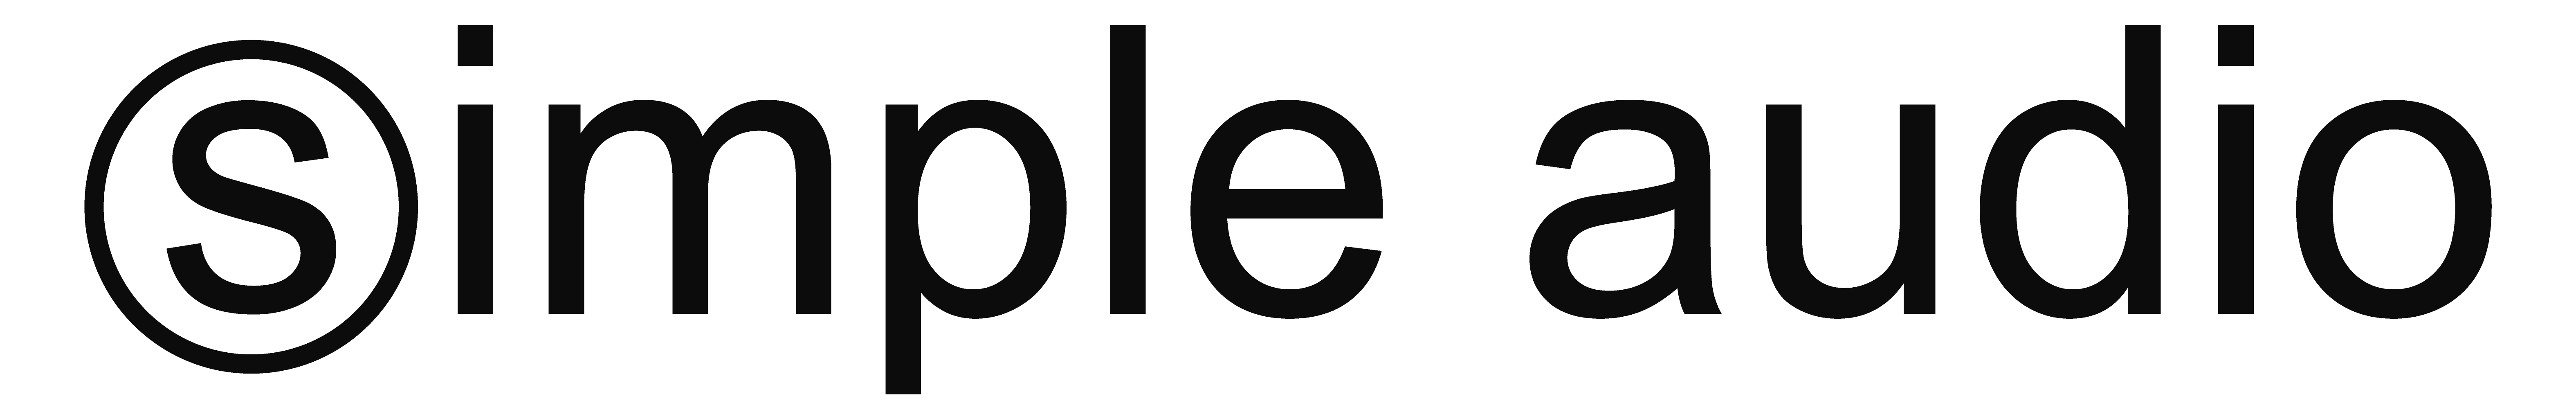 simple audio logo.png